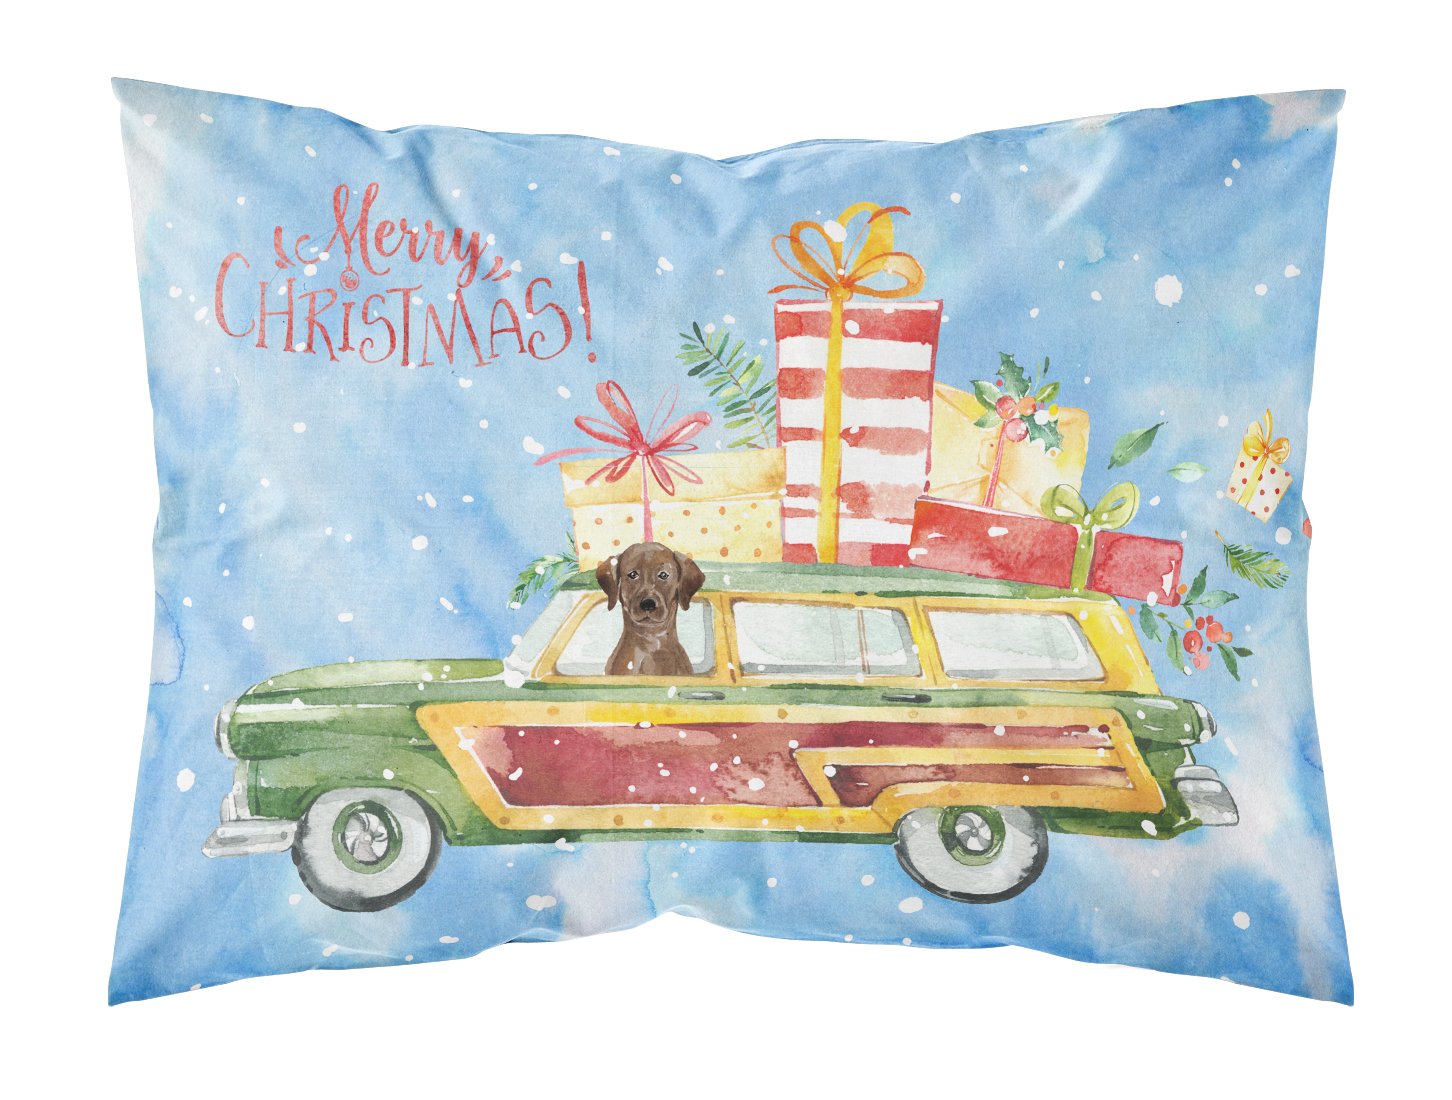 Merry Christmas Chocolate Labrador Retriever Fabric Standard Pillowcase CK2437PILLOWCASE by Caroline's Treasures